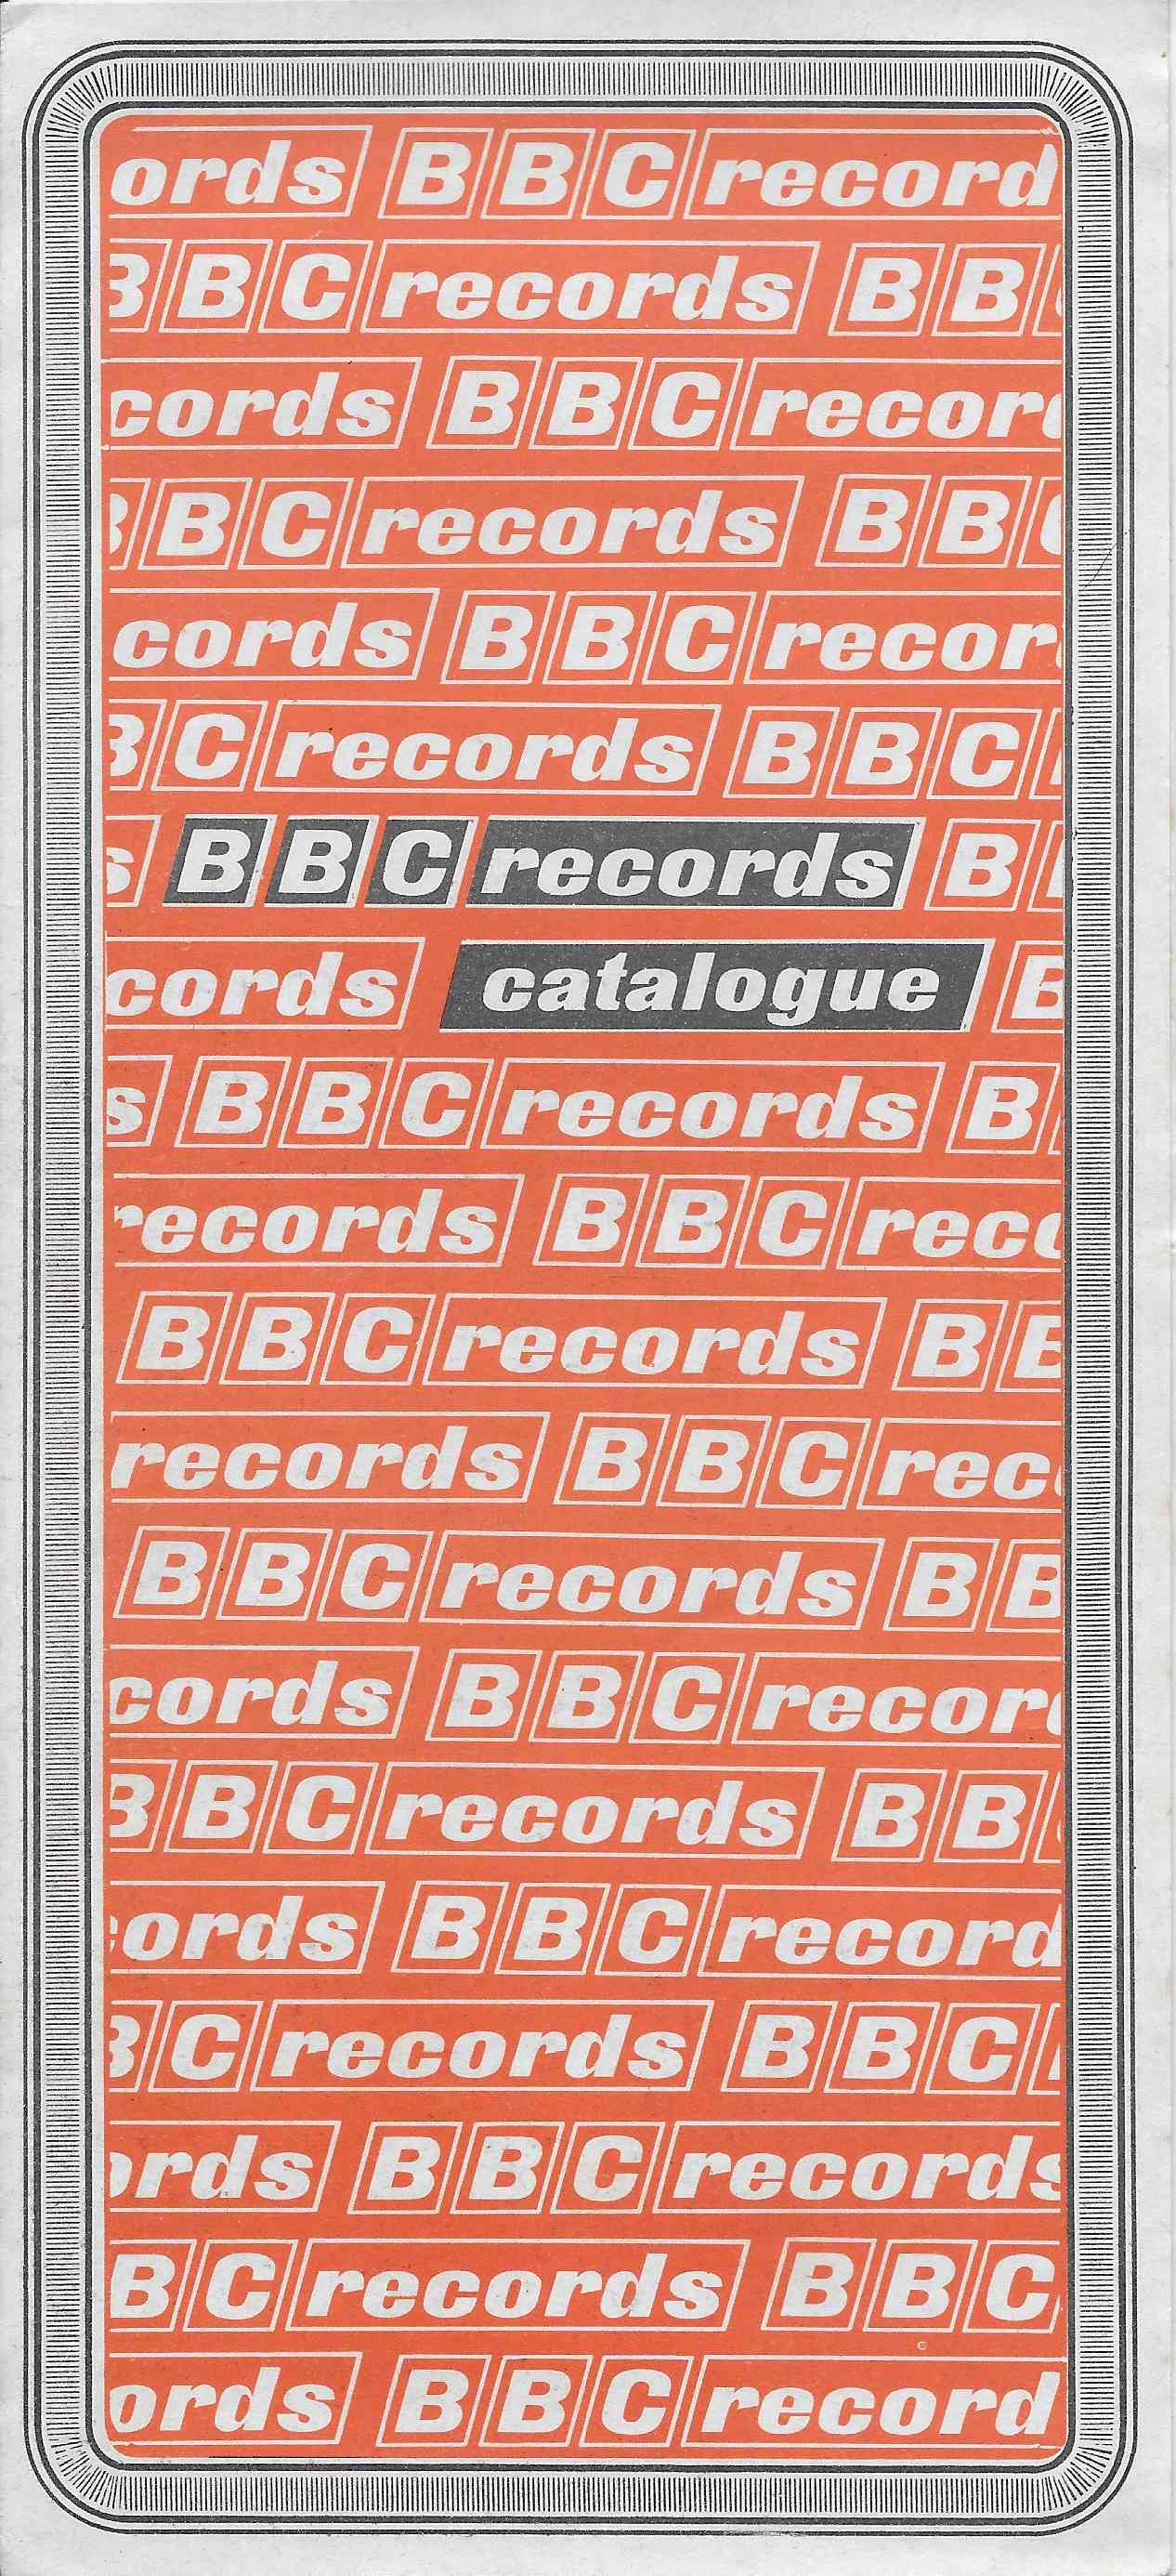 BBC Records catalogue 1970.